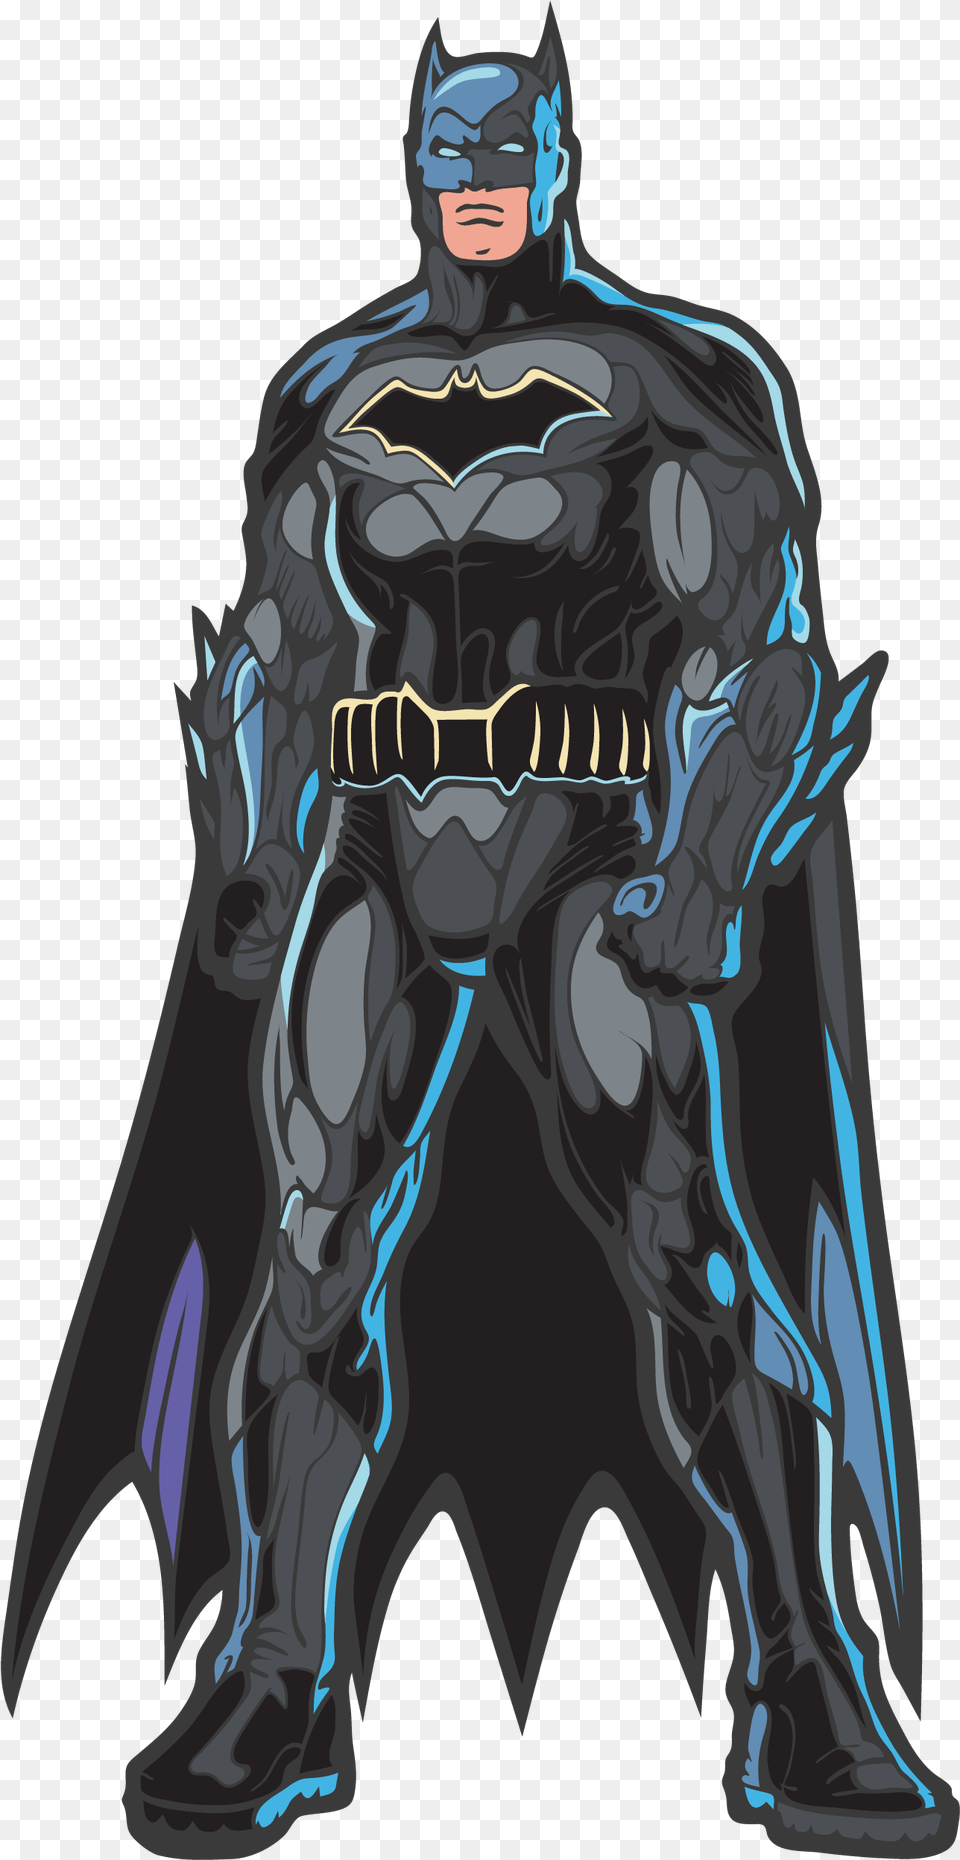 Batman Batman The Rebirth, Adult, Male, Man, Person Png Image